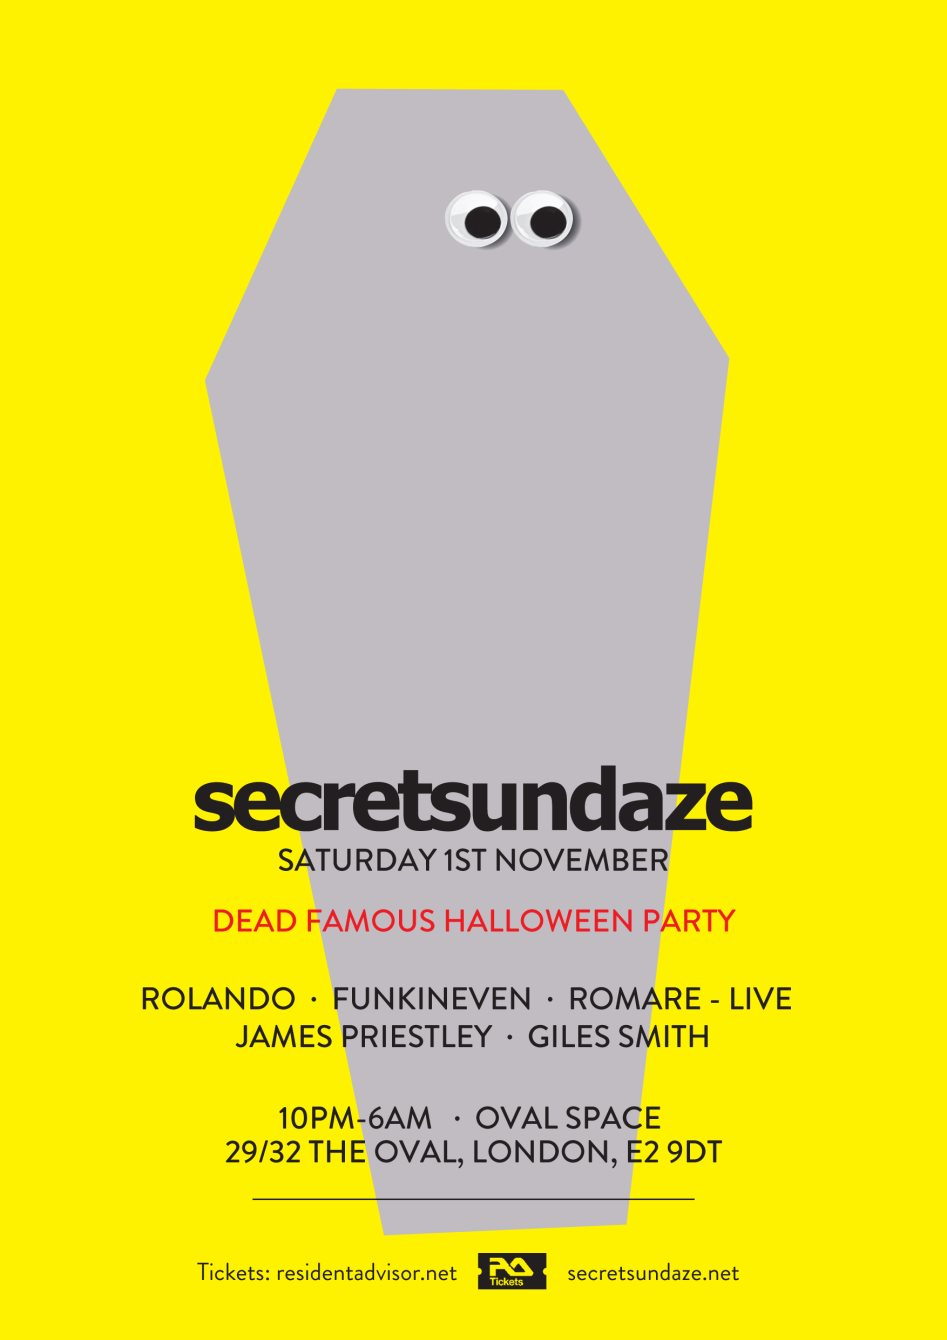 Secretsundaze Dead Famous Halloween Party with Rolando, Funkineven, Romare - Live - Flyer front